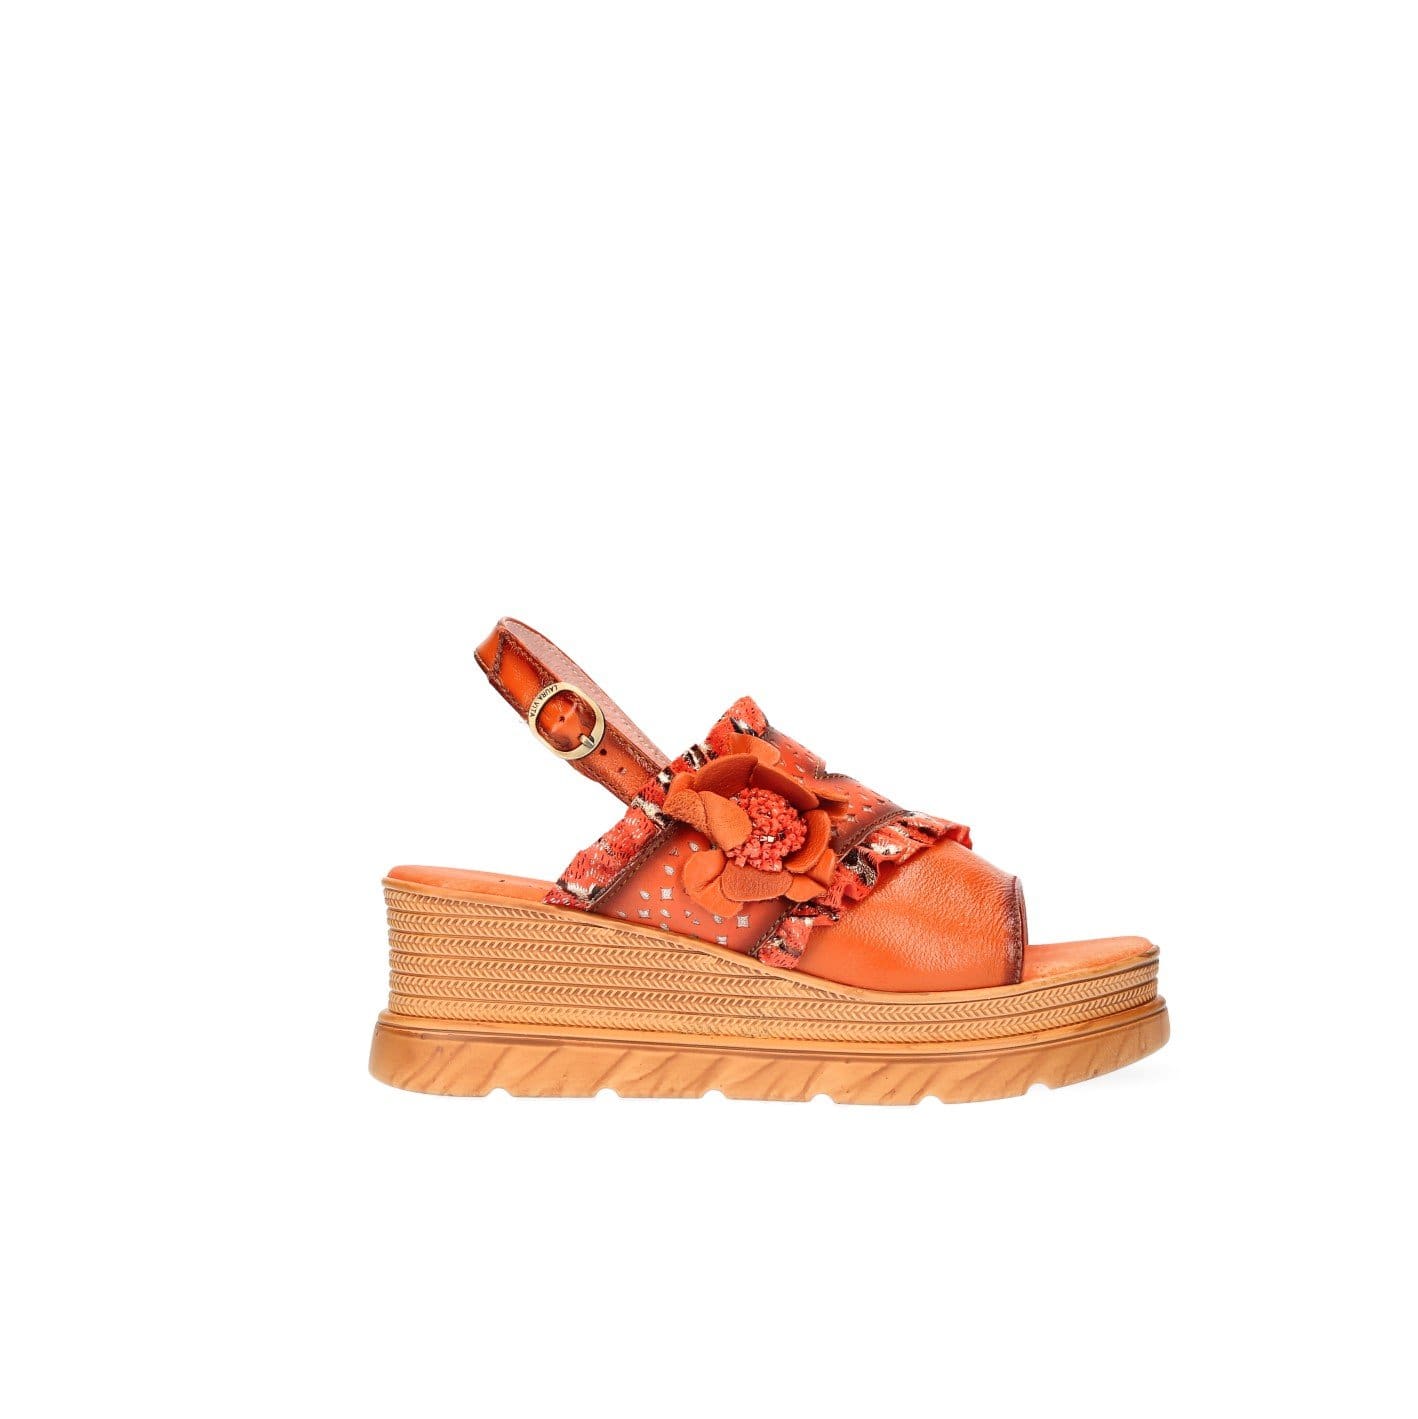 Sko JACASSEO 03 - 35 / Orange - Sandal